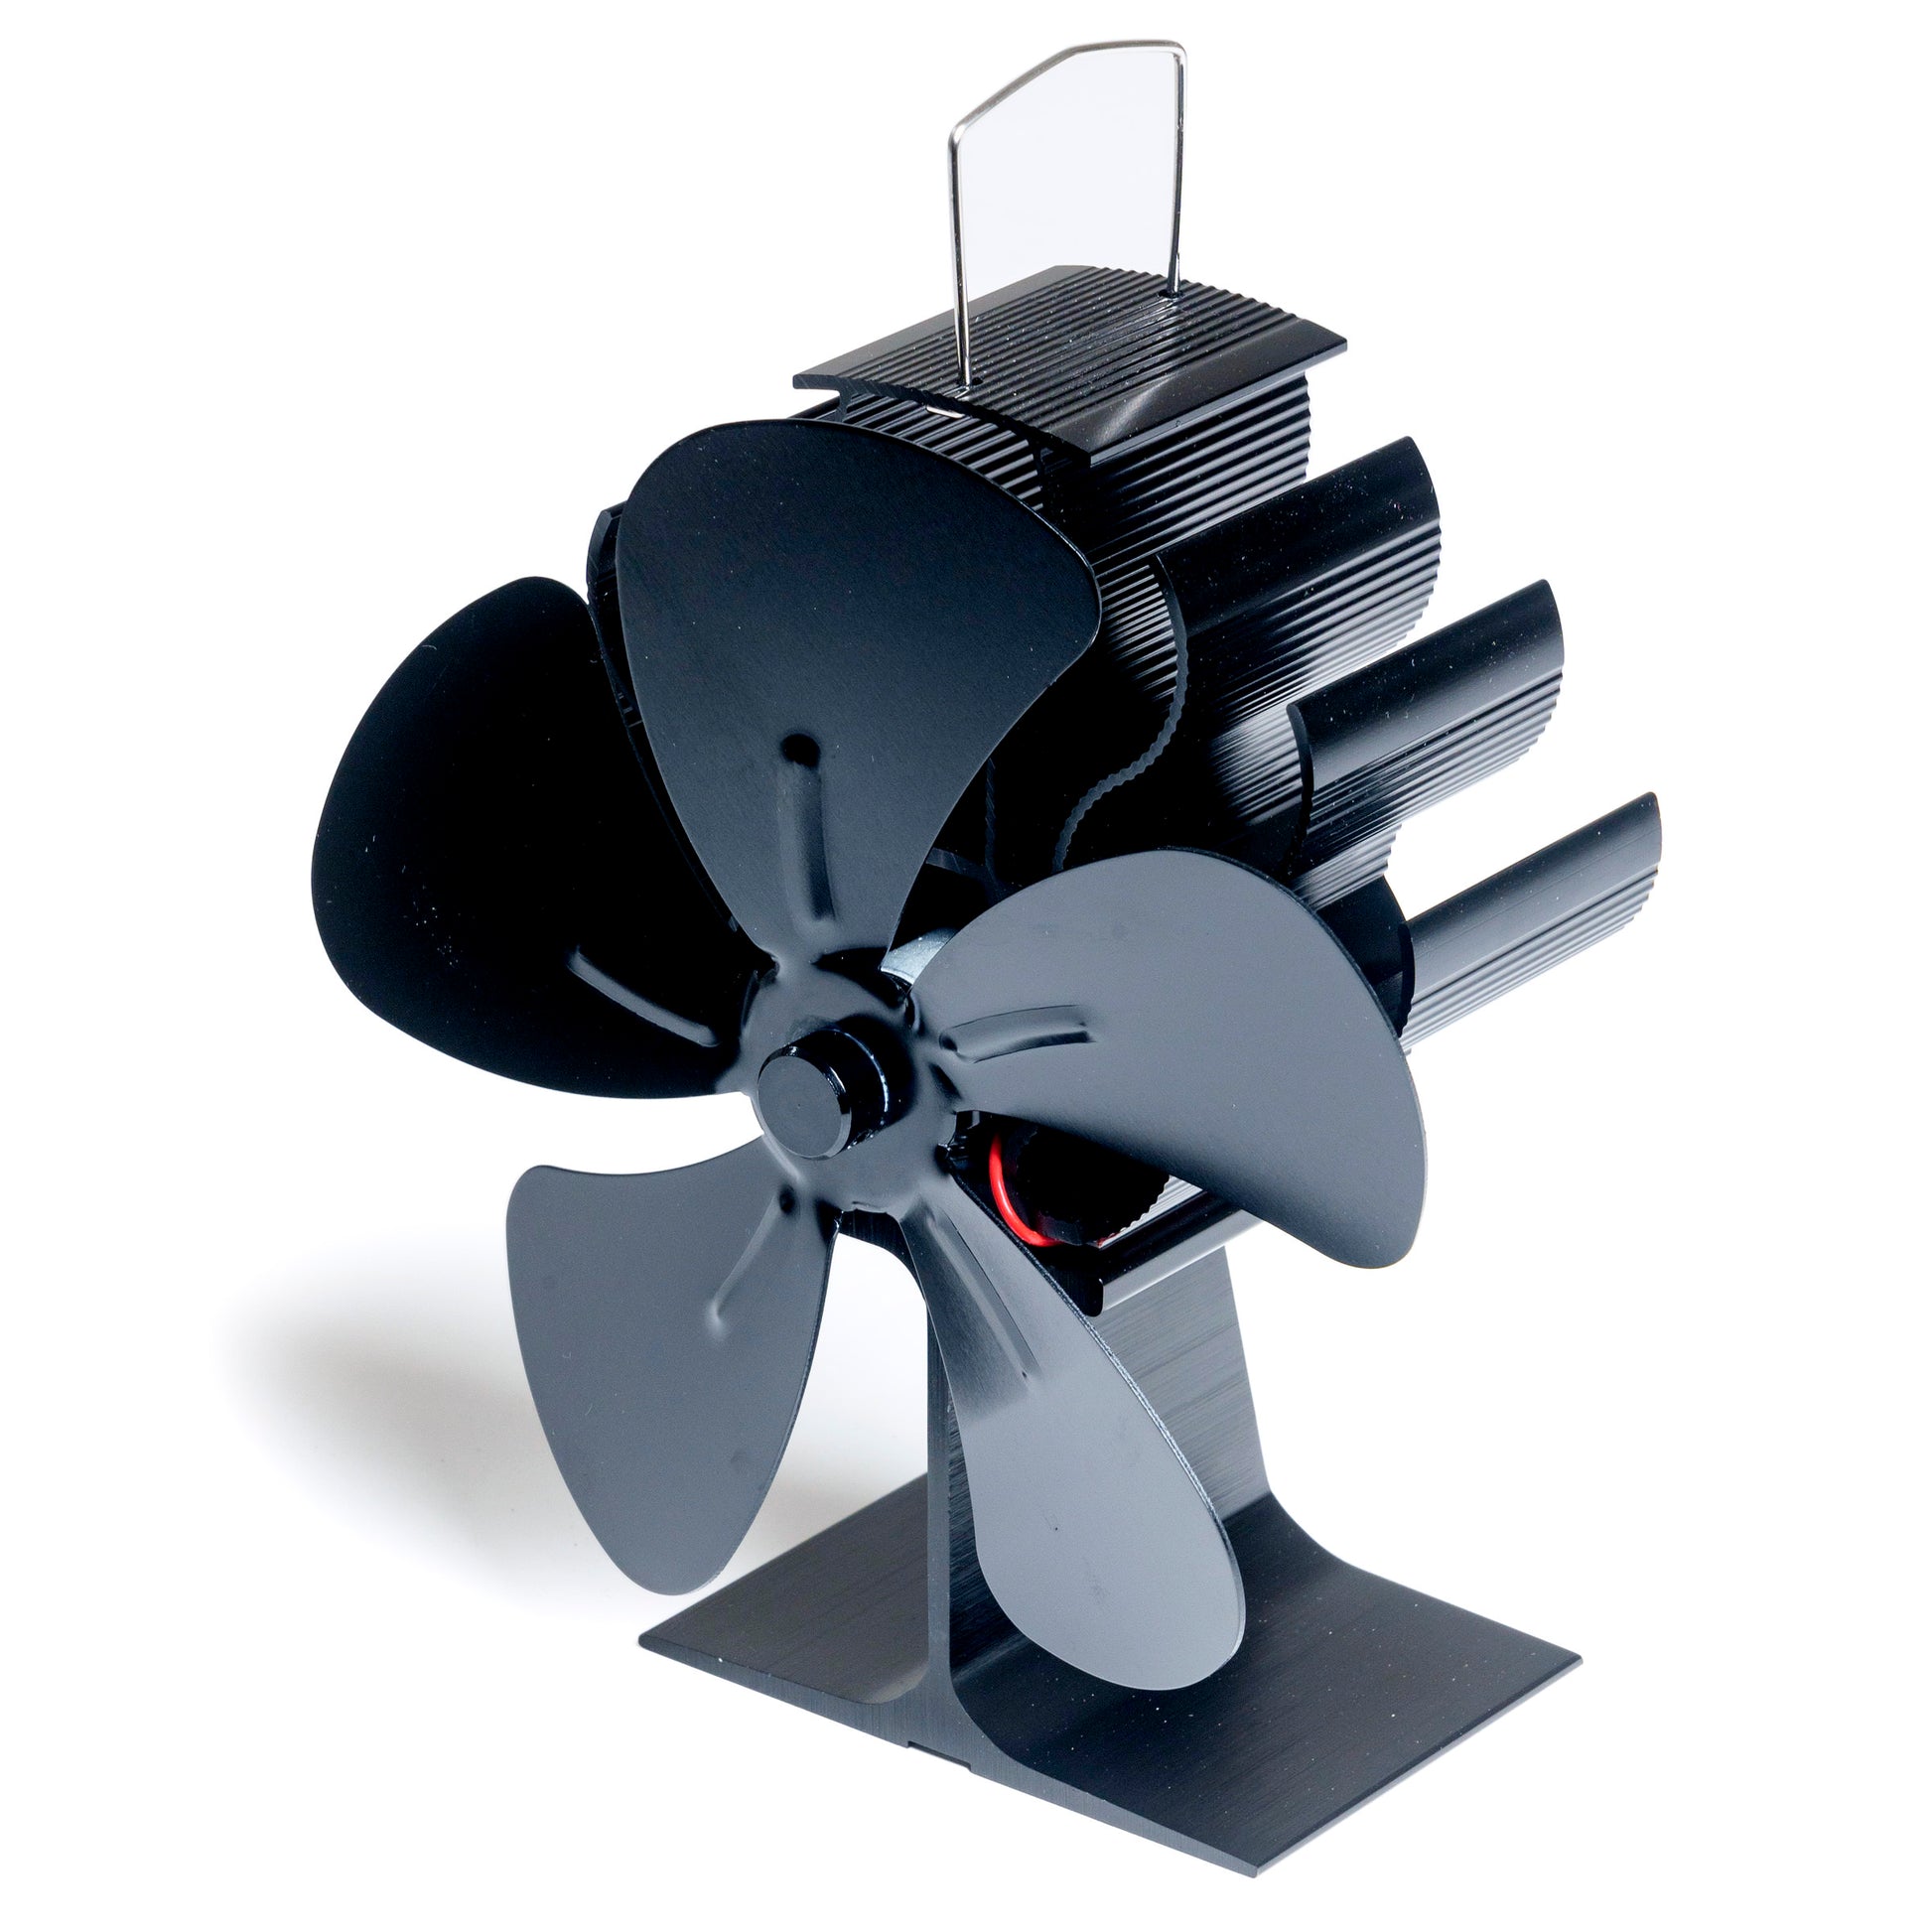 Stove Heat-powered fan – OverlandSauna